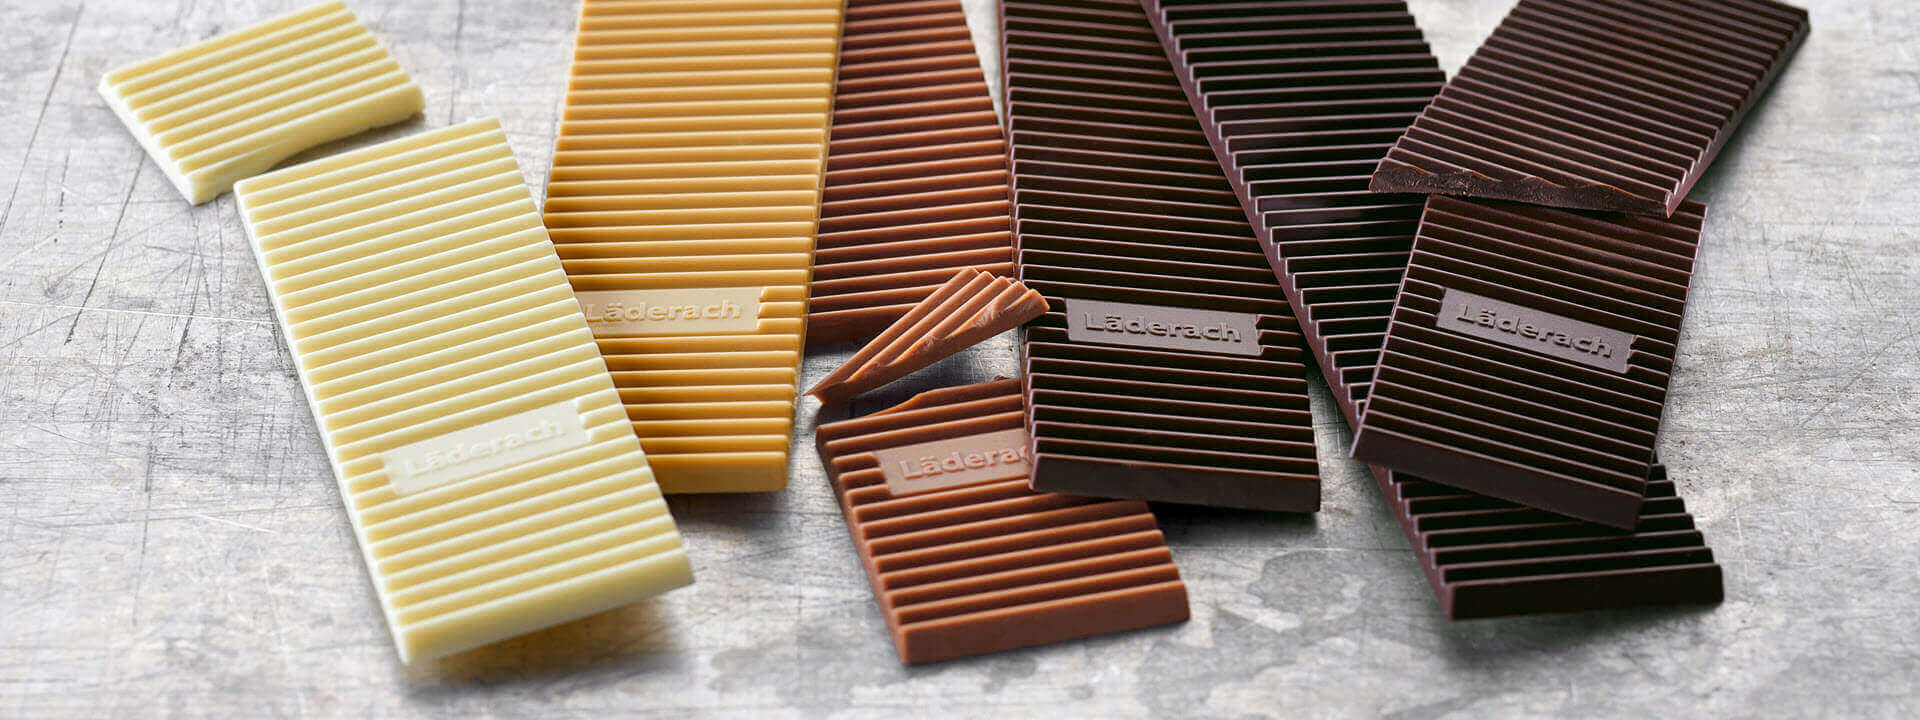 Pure, honest and modern: Läderach reinterprets the chocolate bar